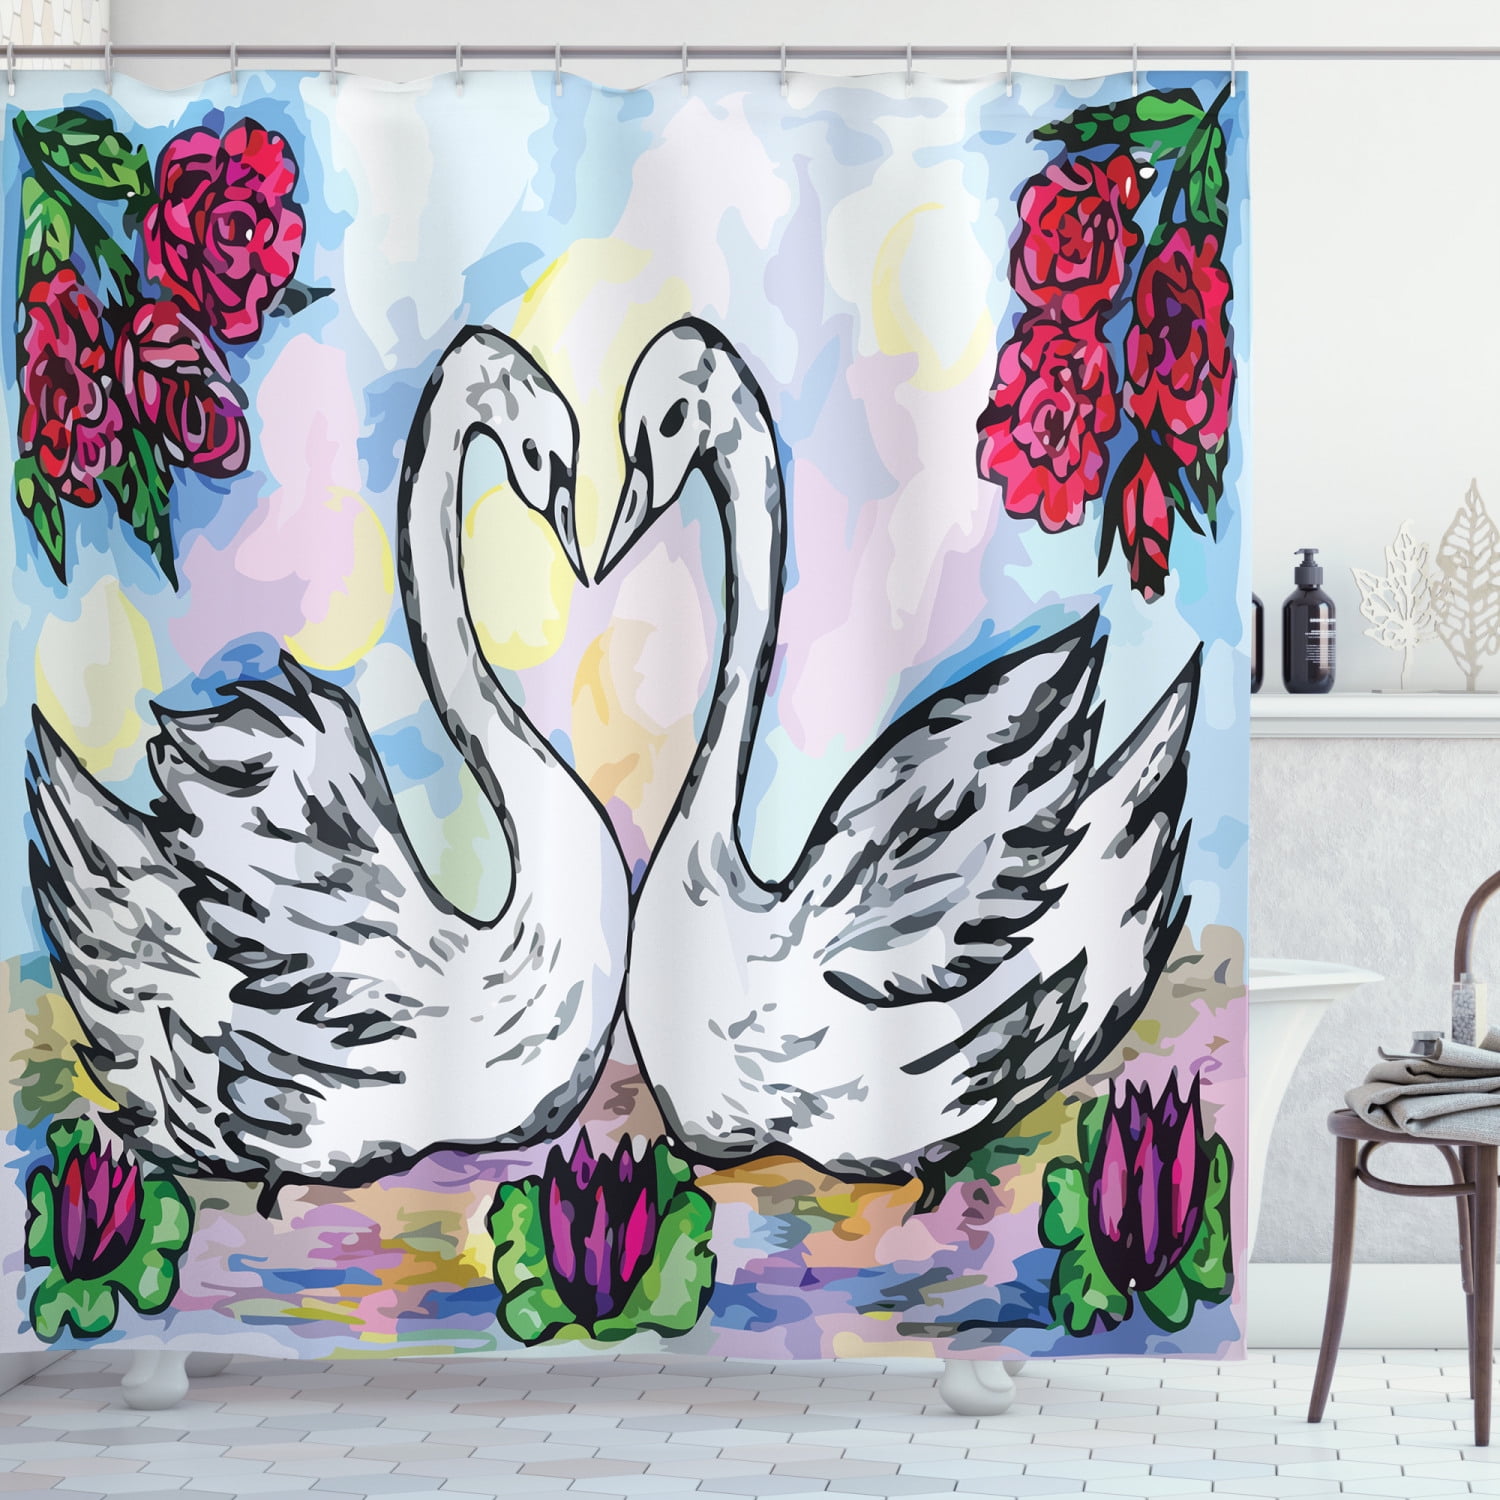 White Swan Couple Shower Curtain Bathroom Decor Fabric & 12hooks 71 Inch 